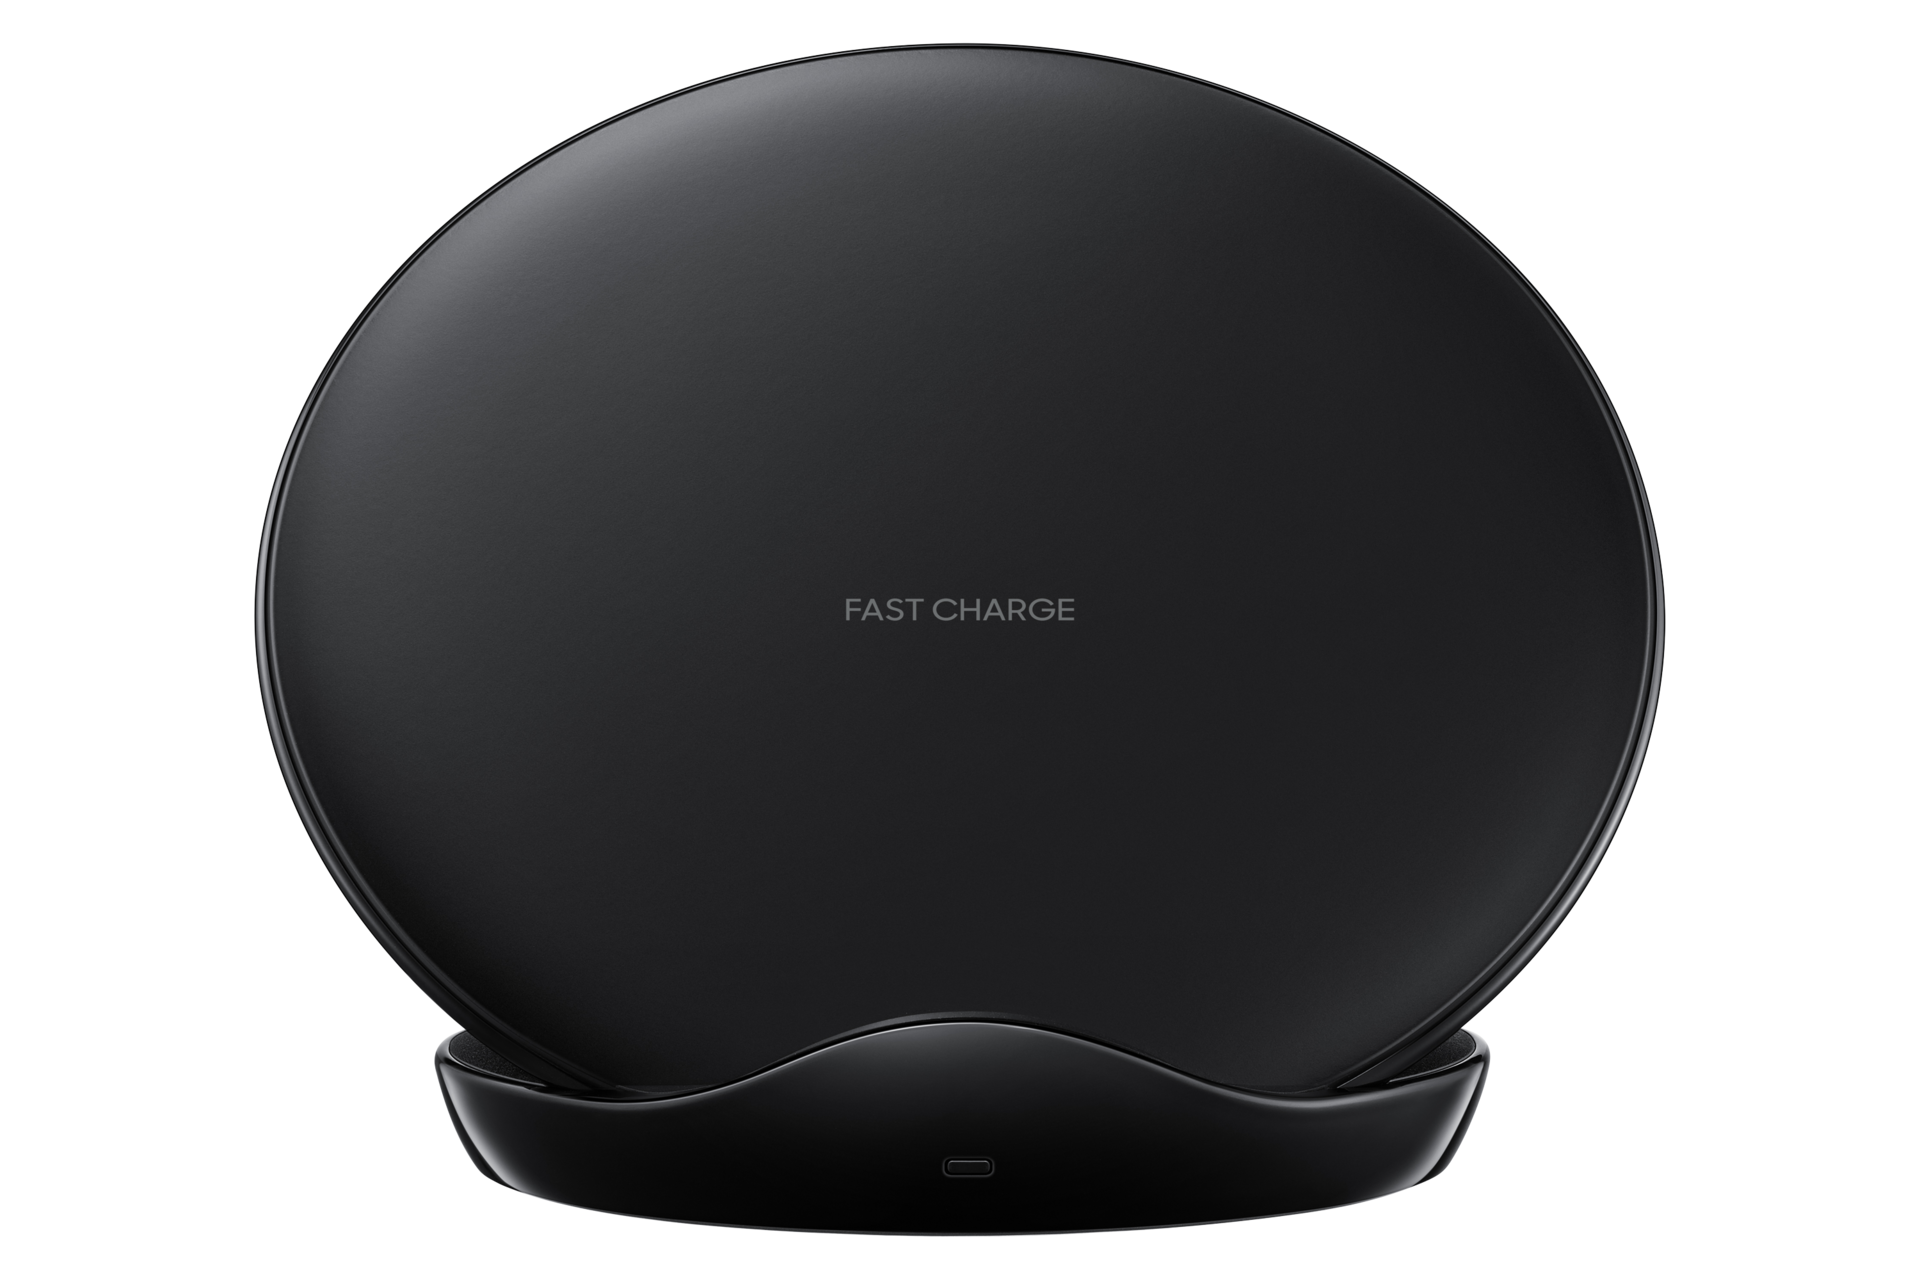 2018 Wireless Charger Black | Samsung Support NZ